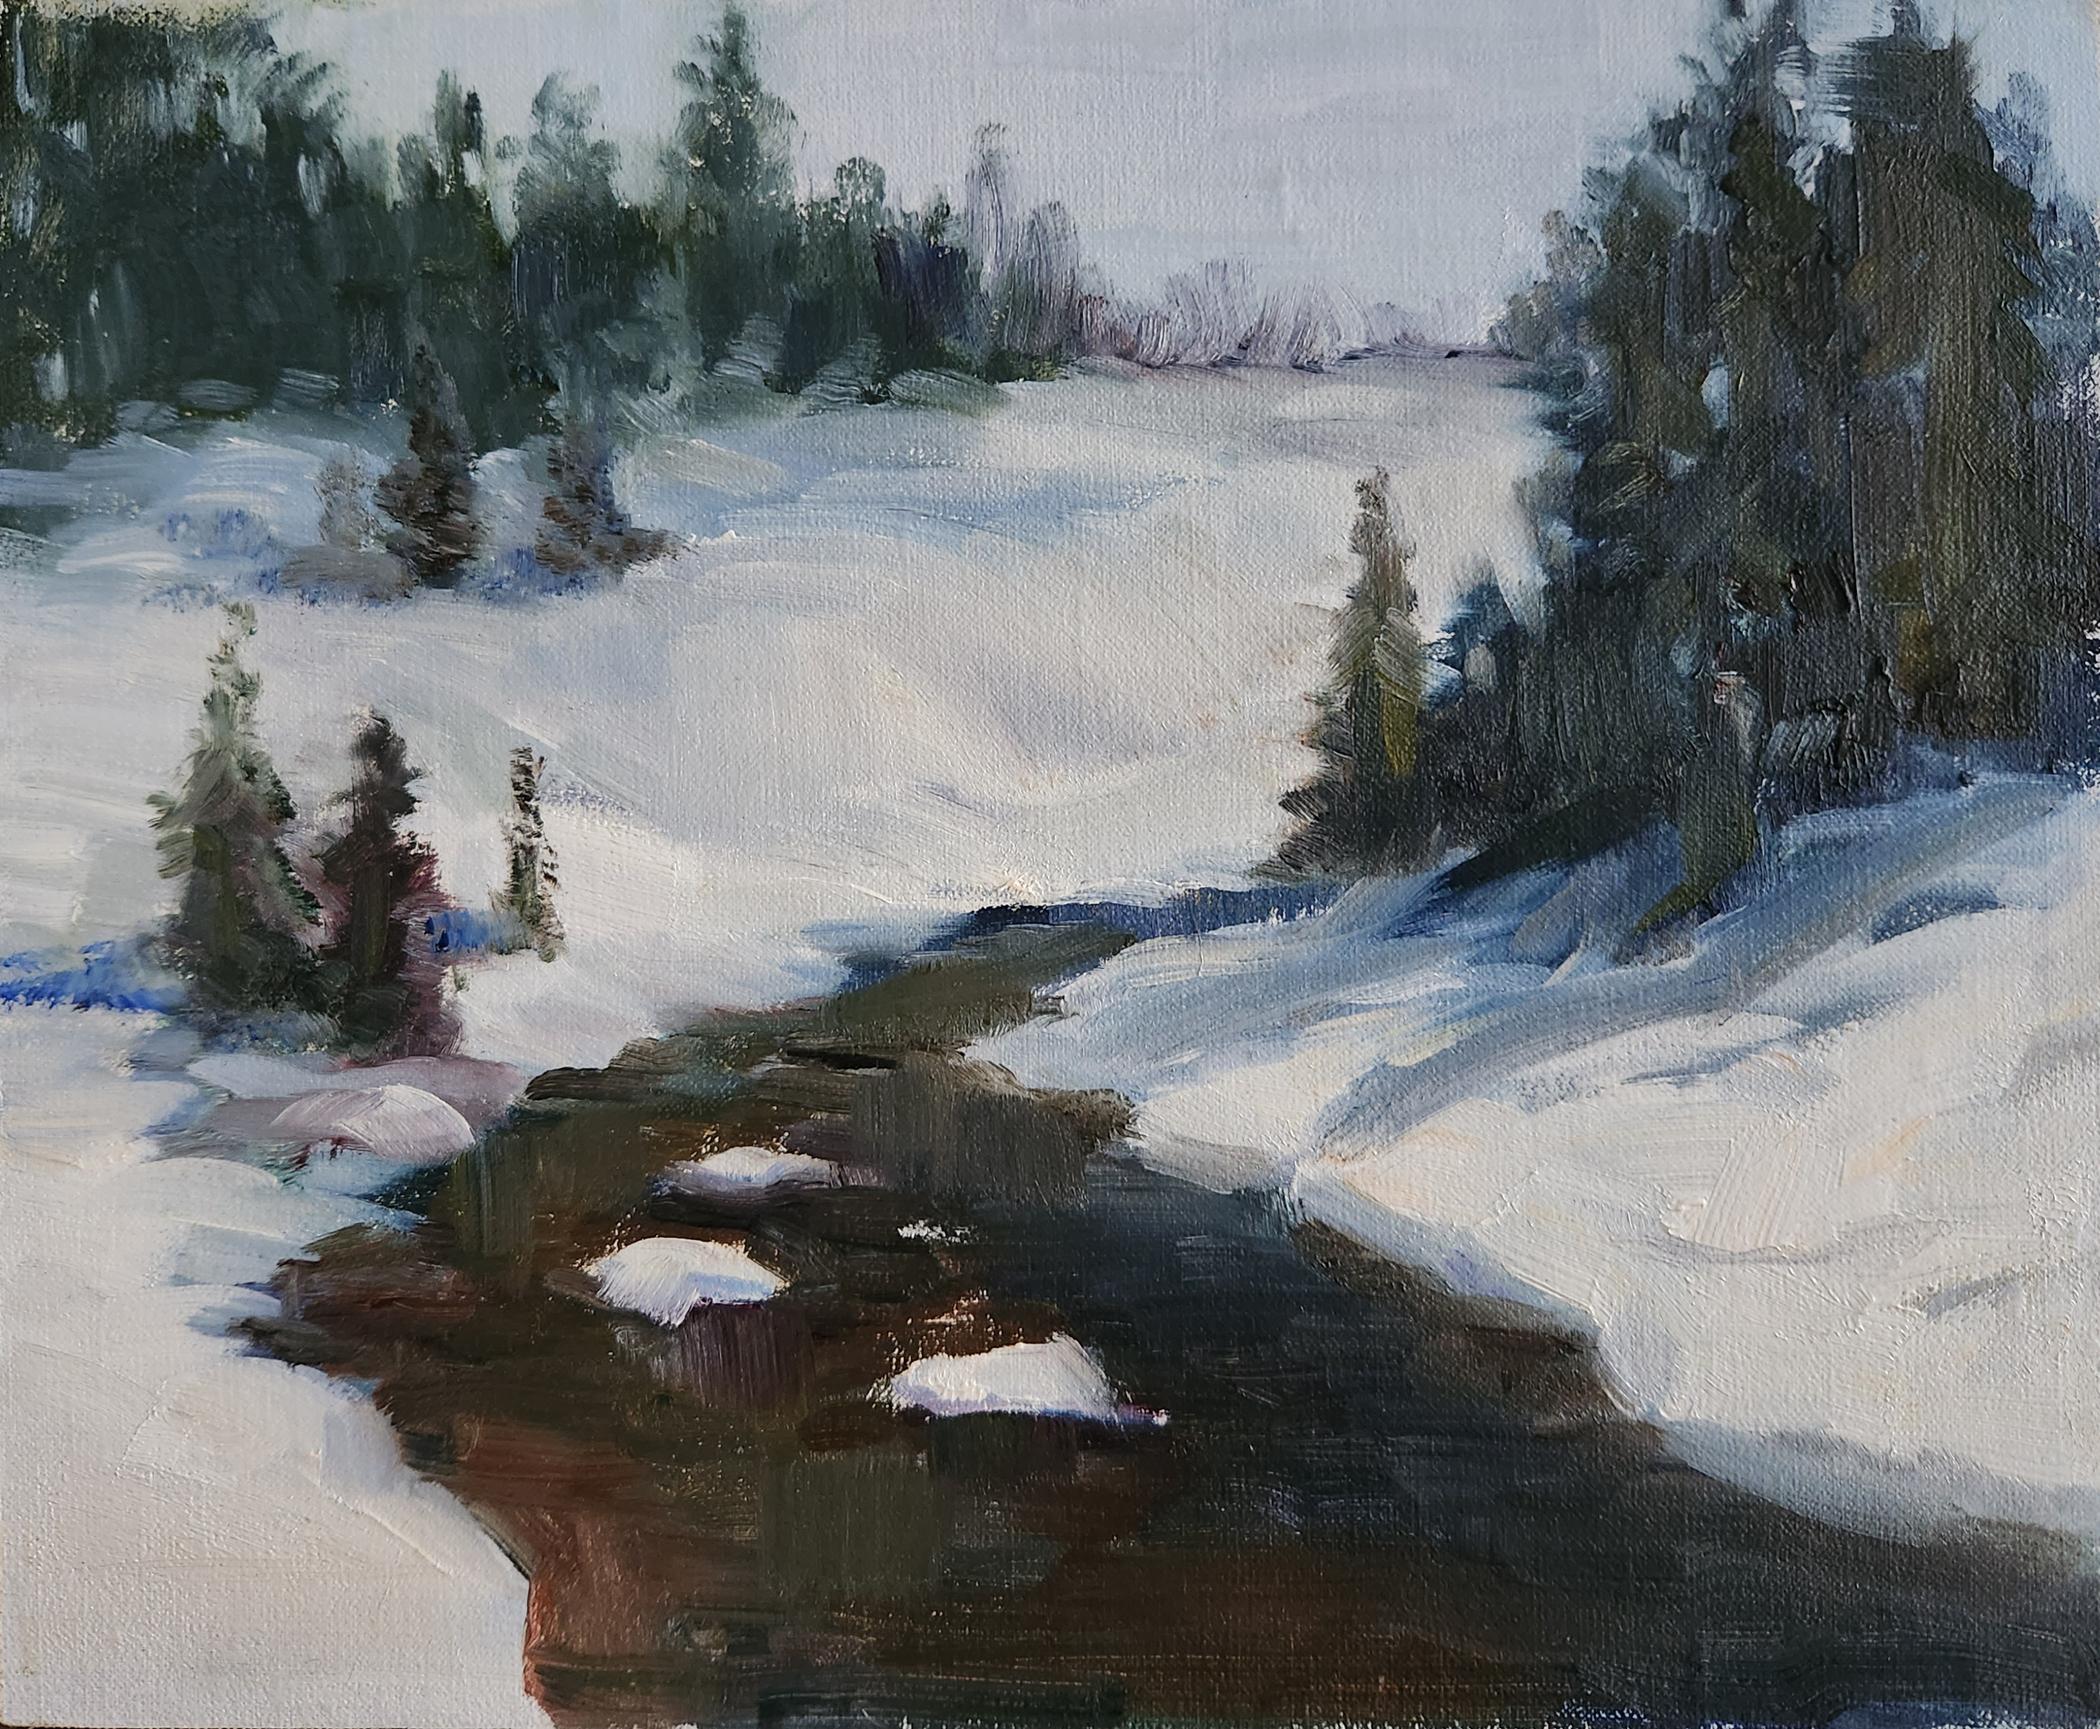 Winter Fresh, 8x10" oil on board - Painting by Lu Haskew